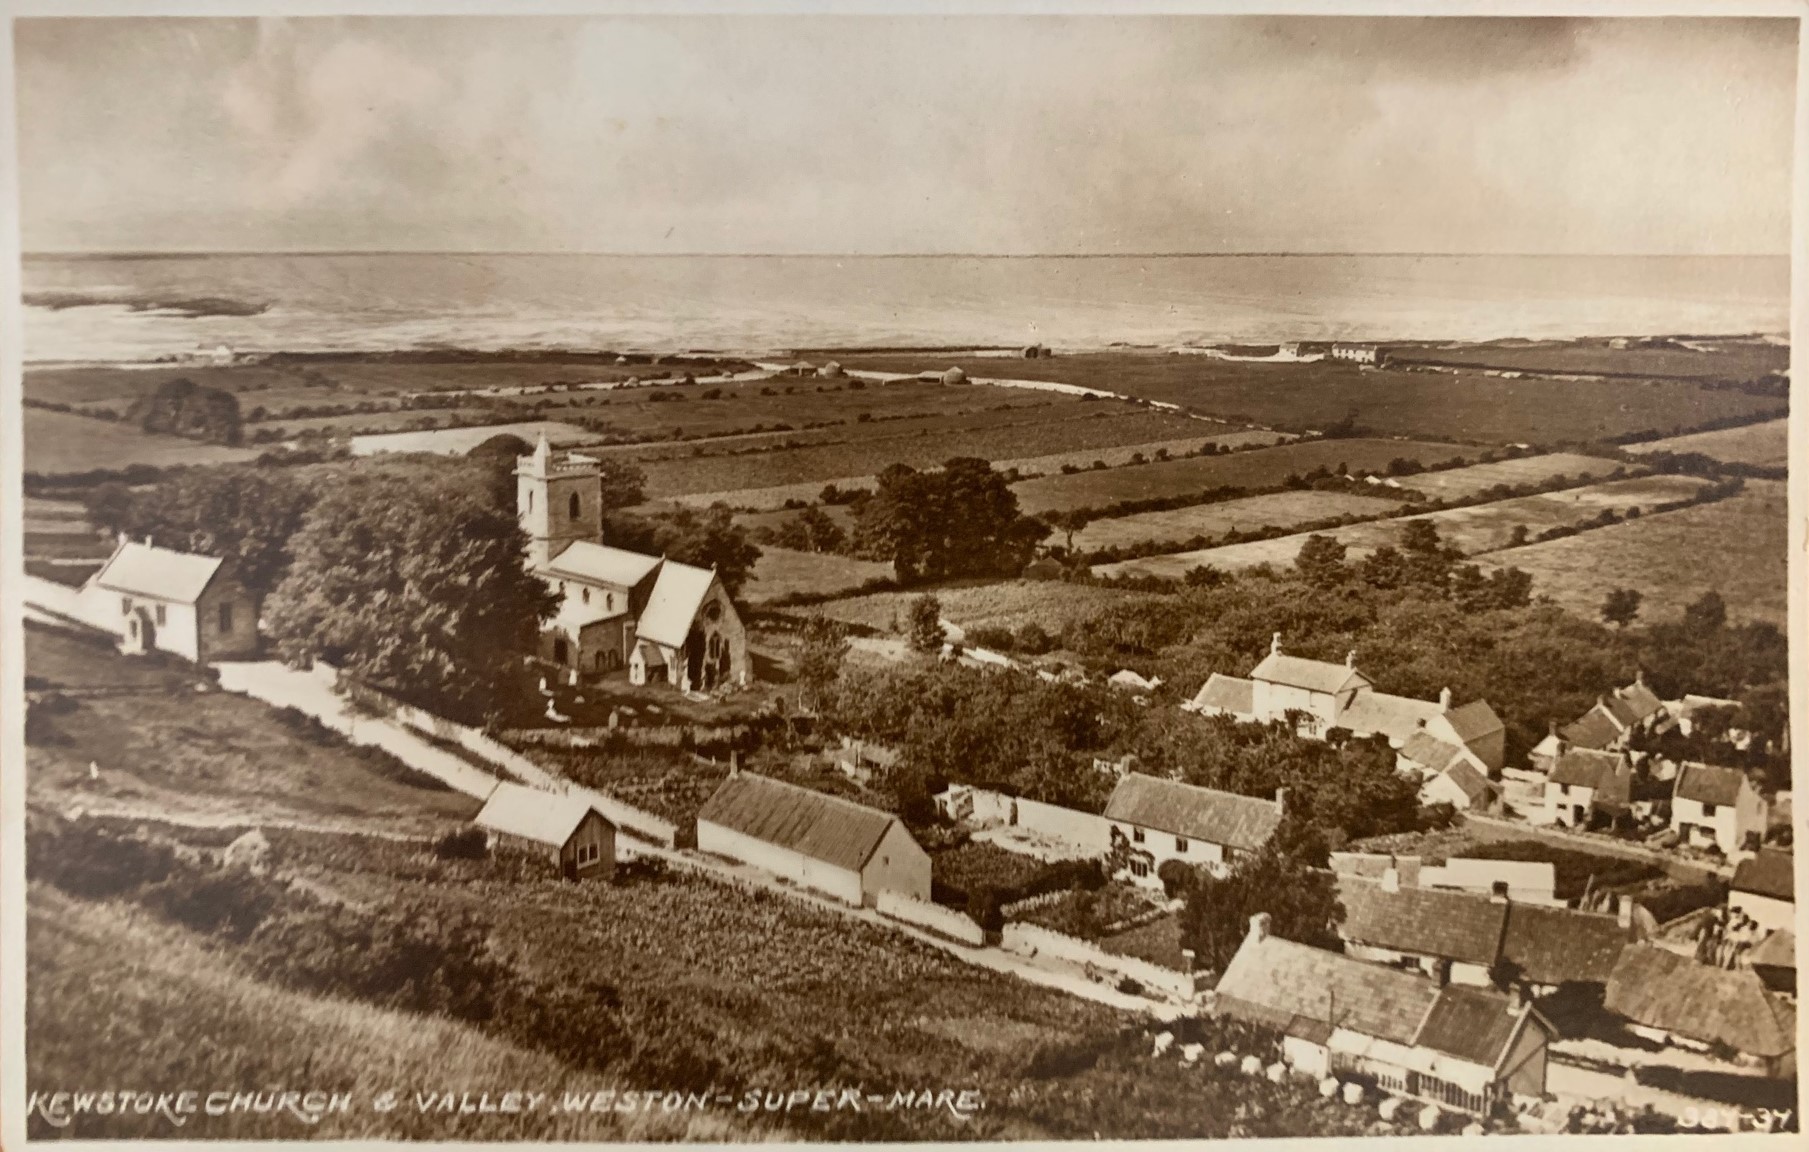 Kewstoke Village and Church